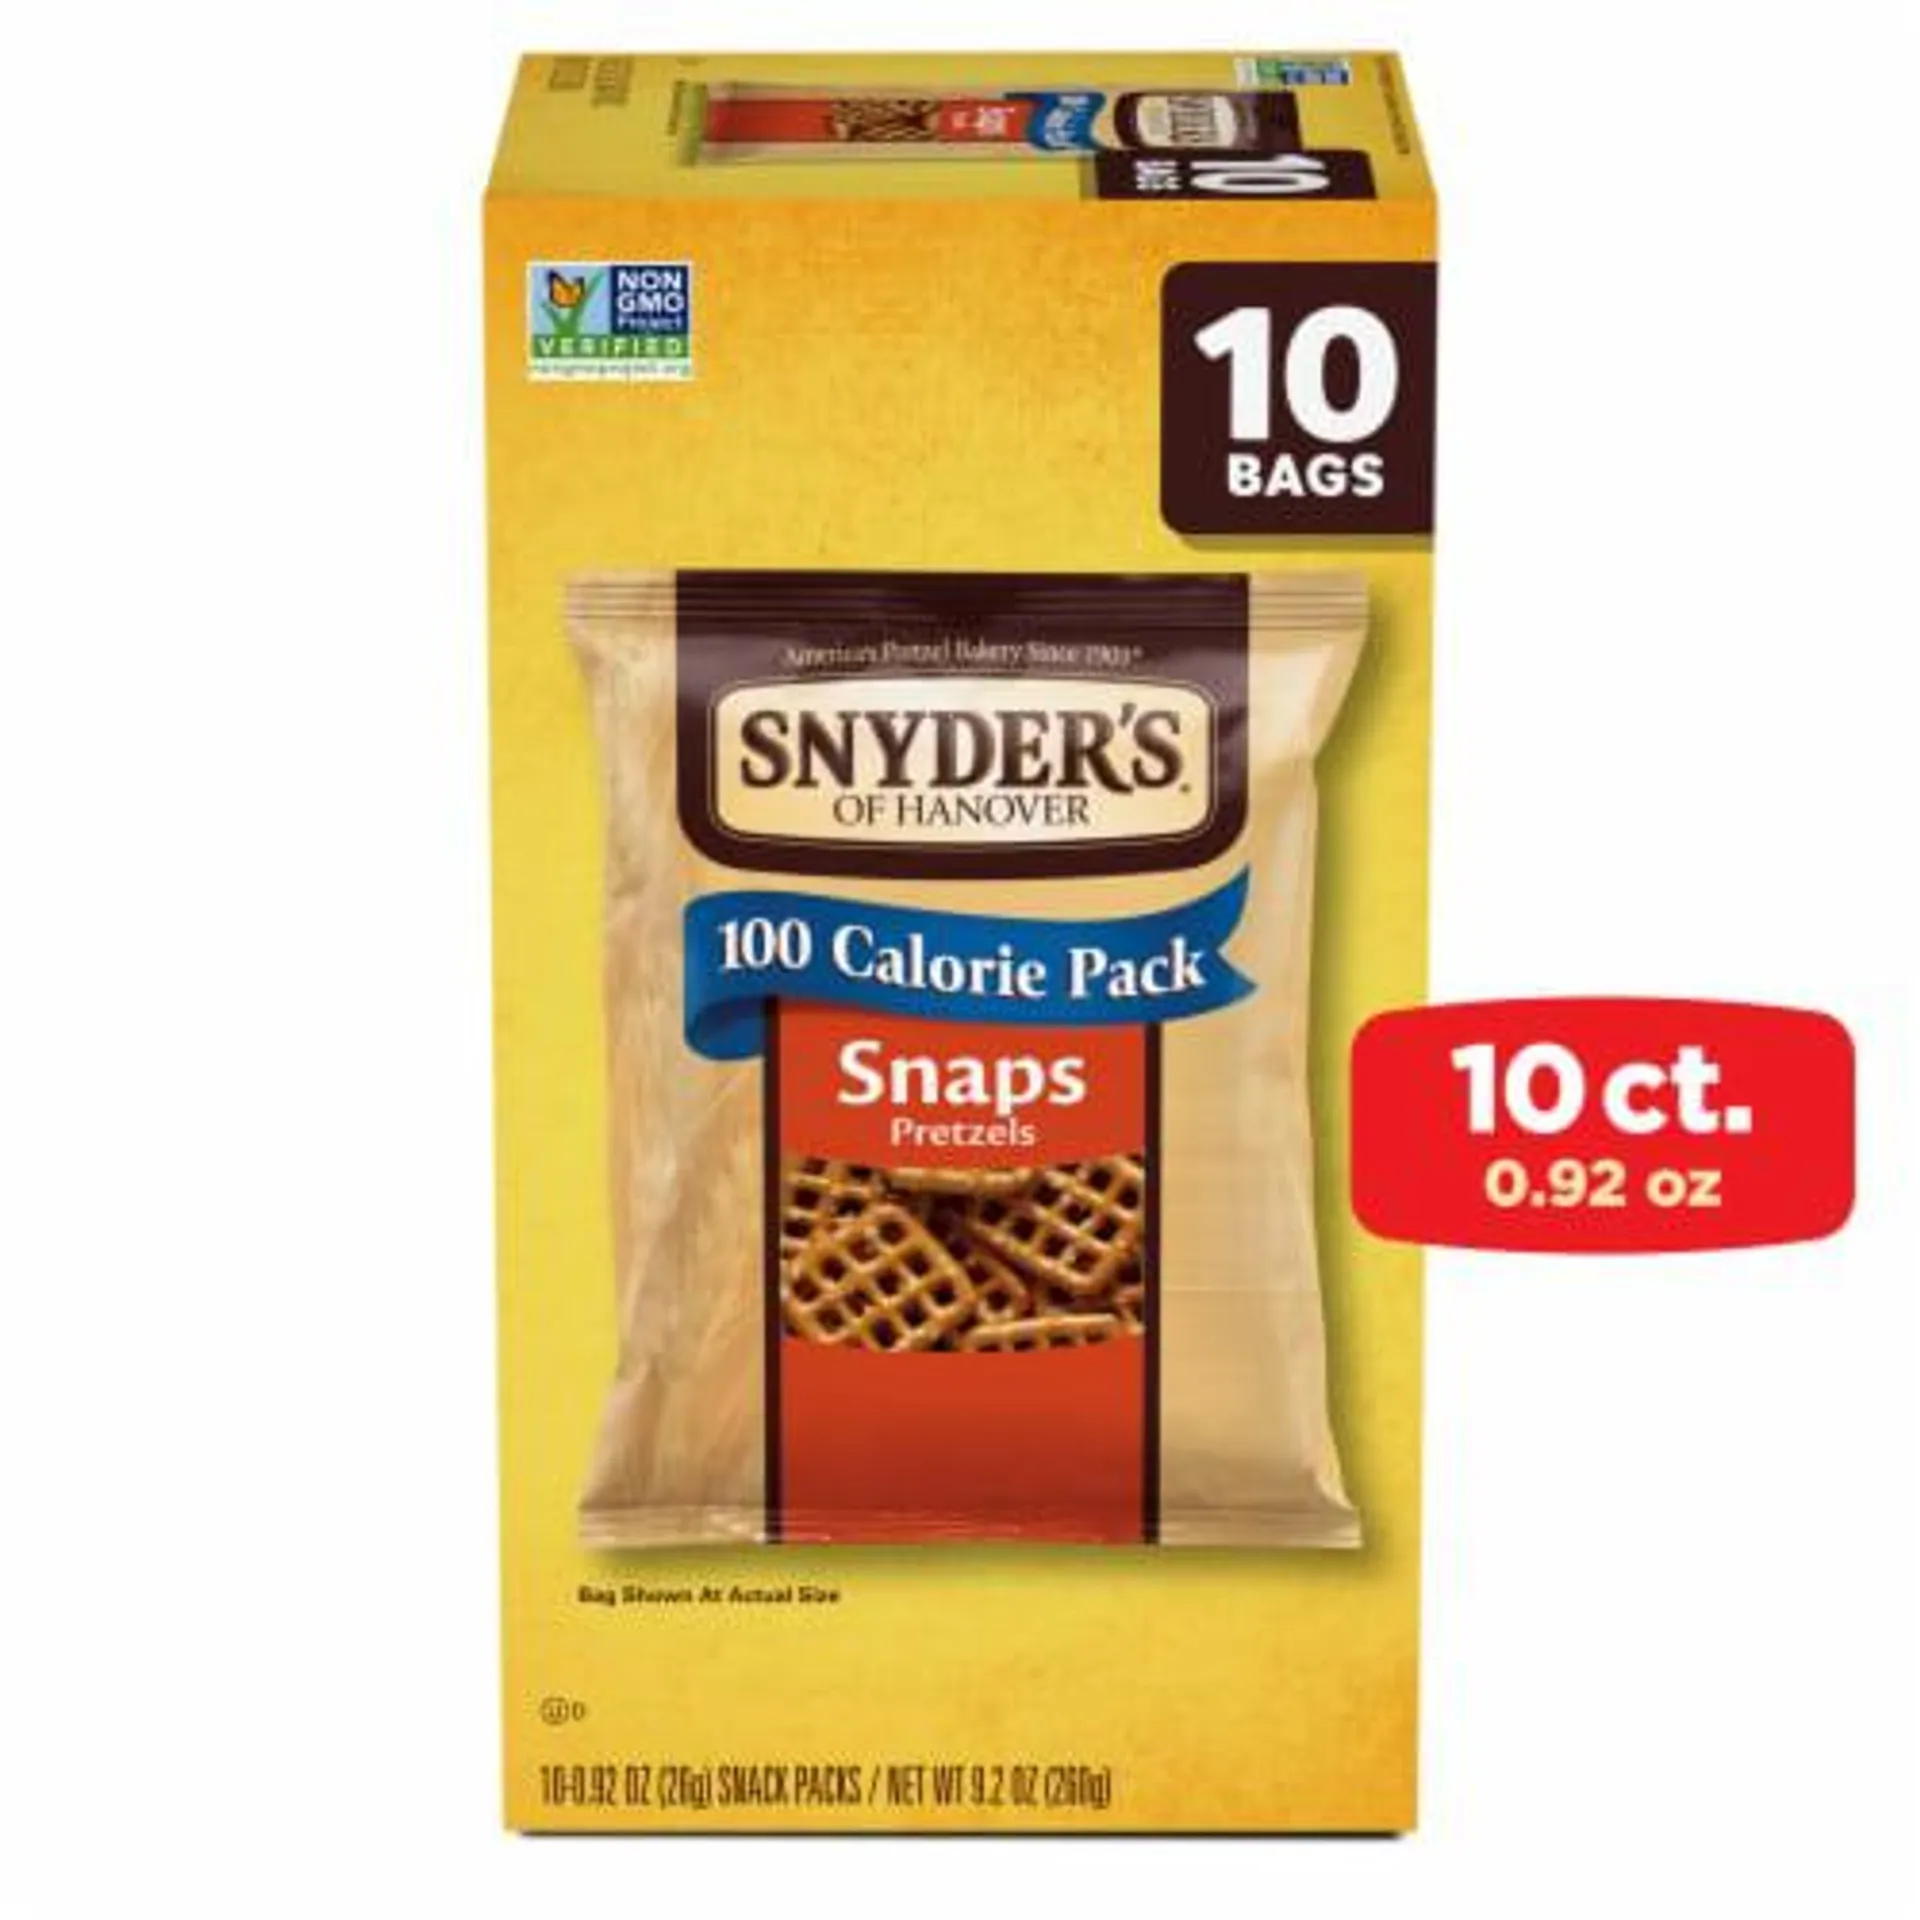 Snyder's® of Hanover Pretzels Snaps 100 Calorie Packs